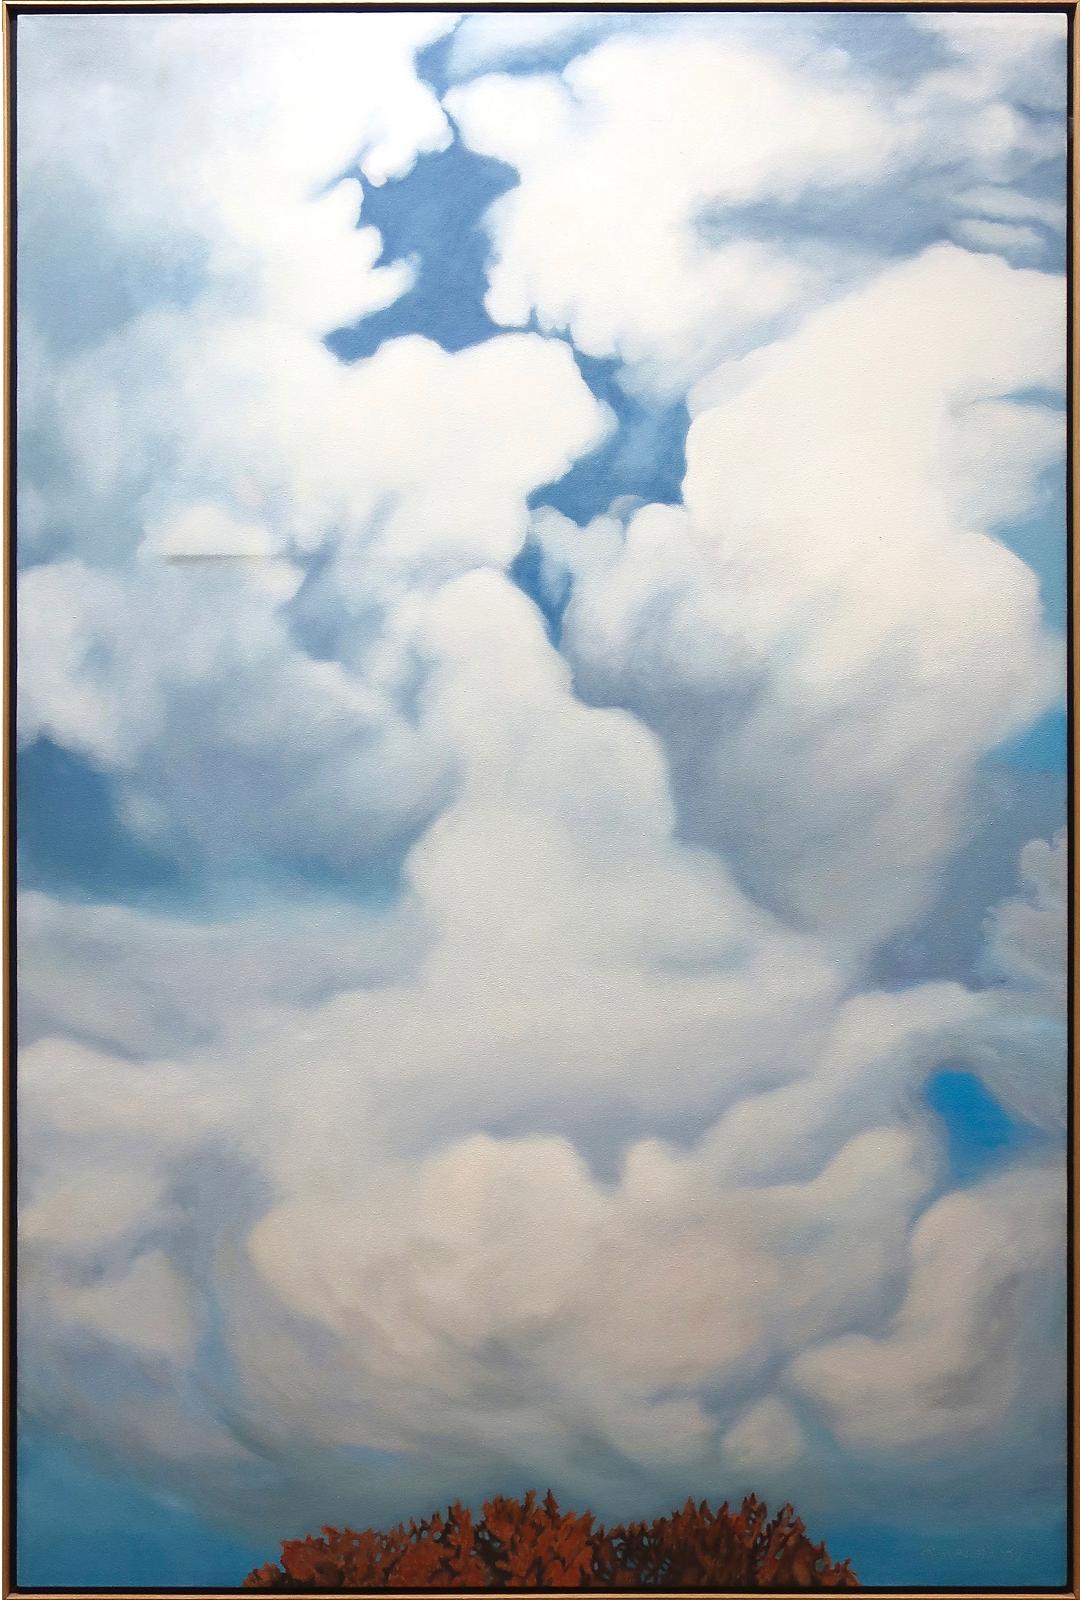 Unfolding Sky by artist Allan O'mara